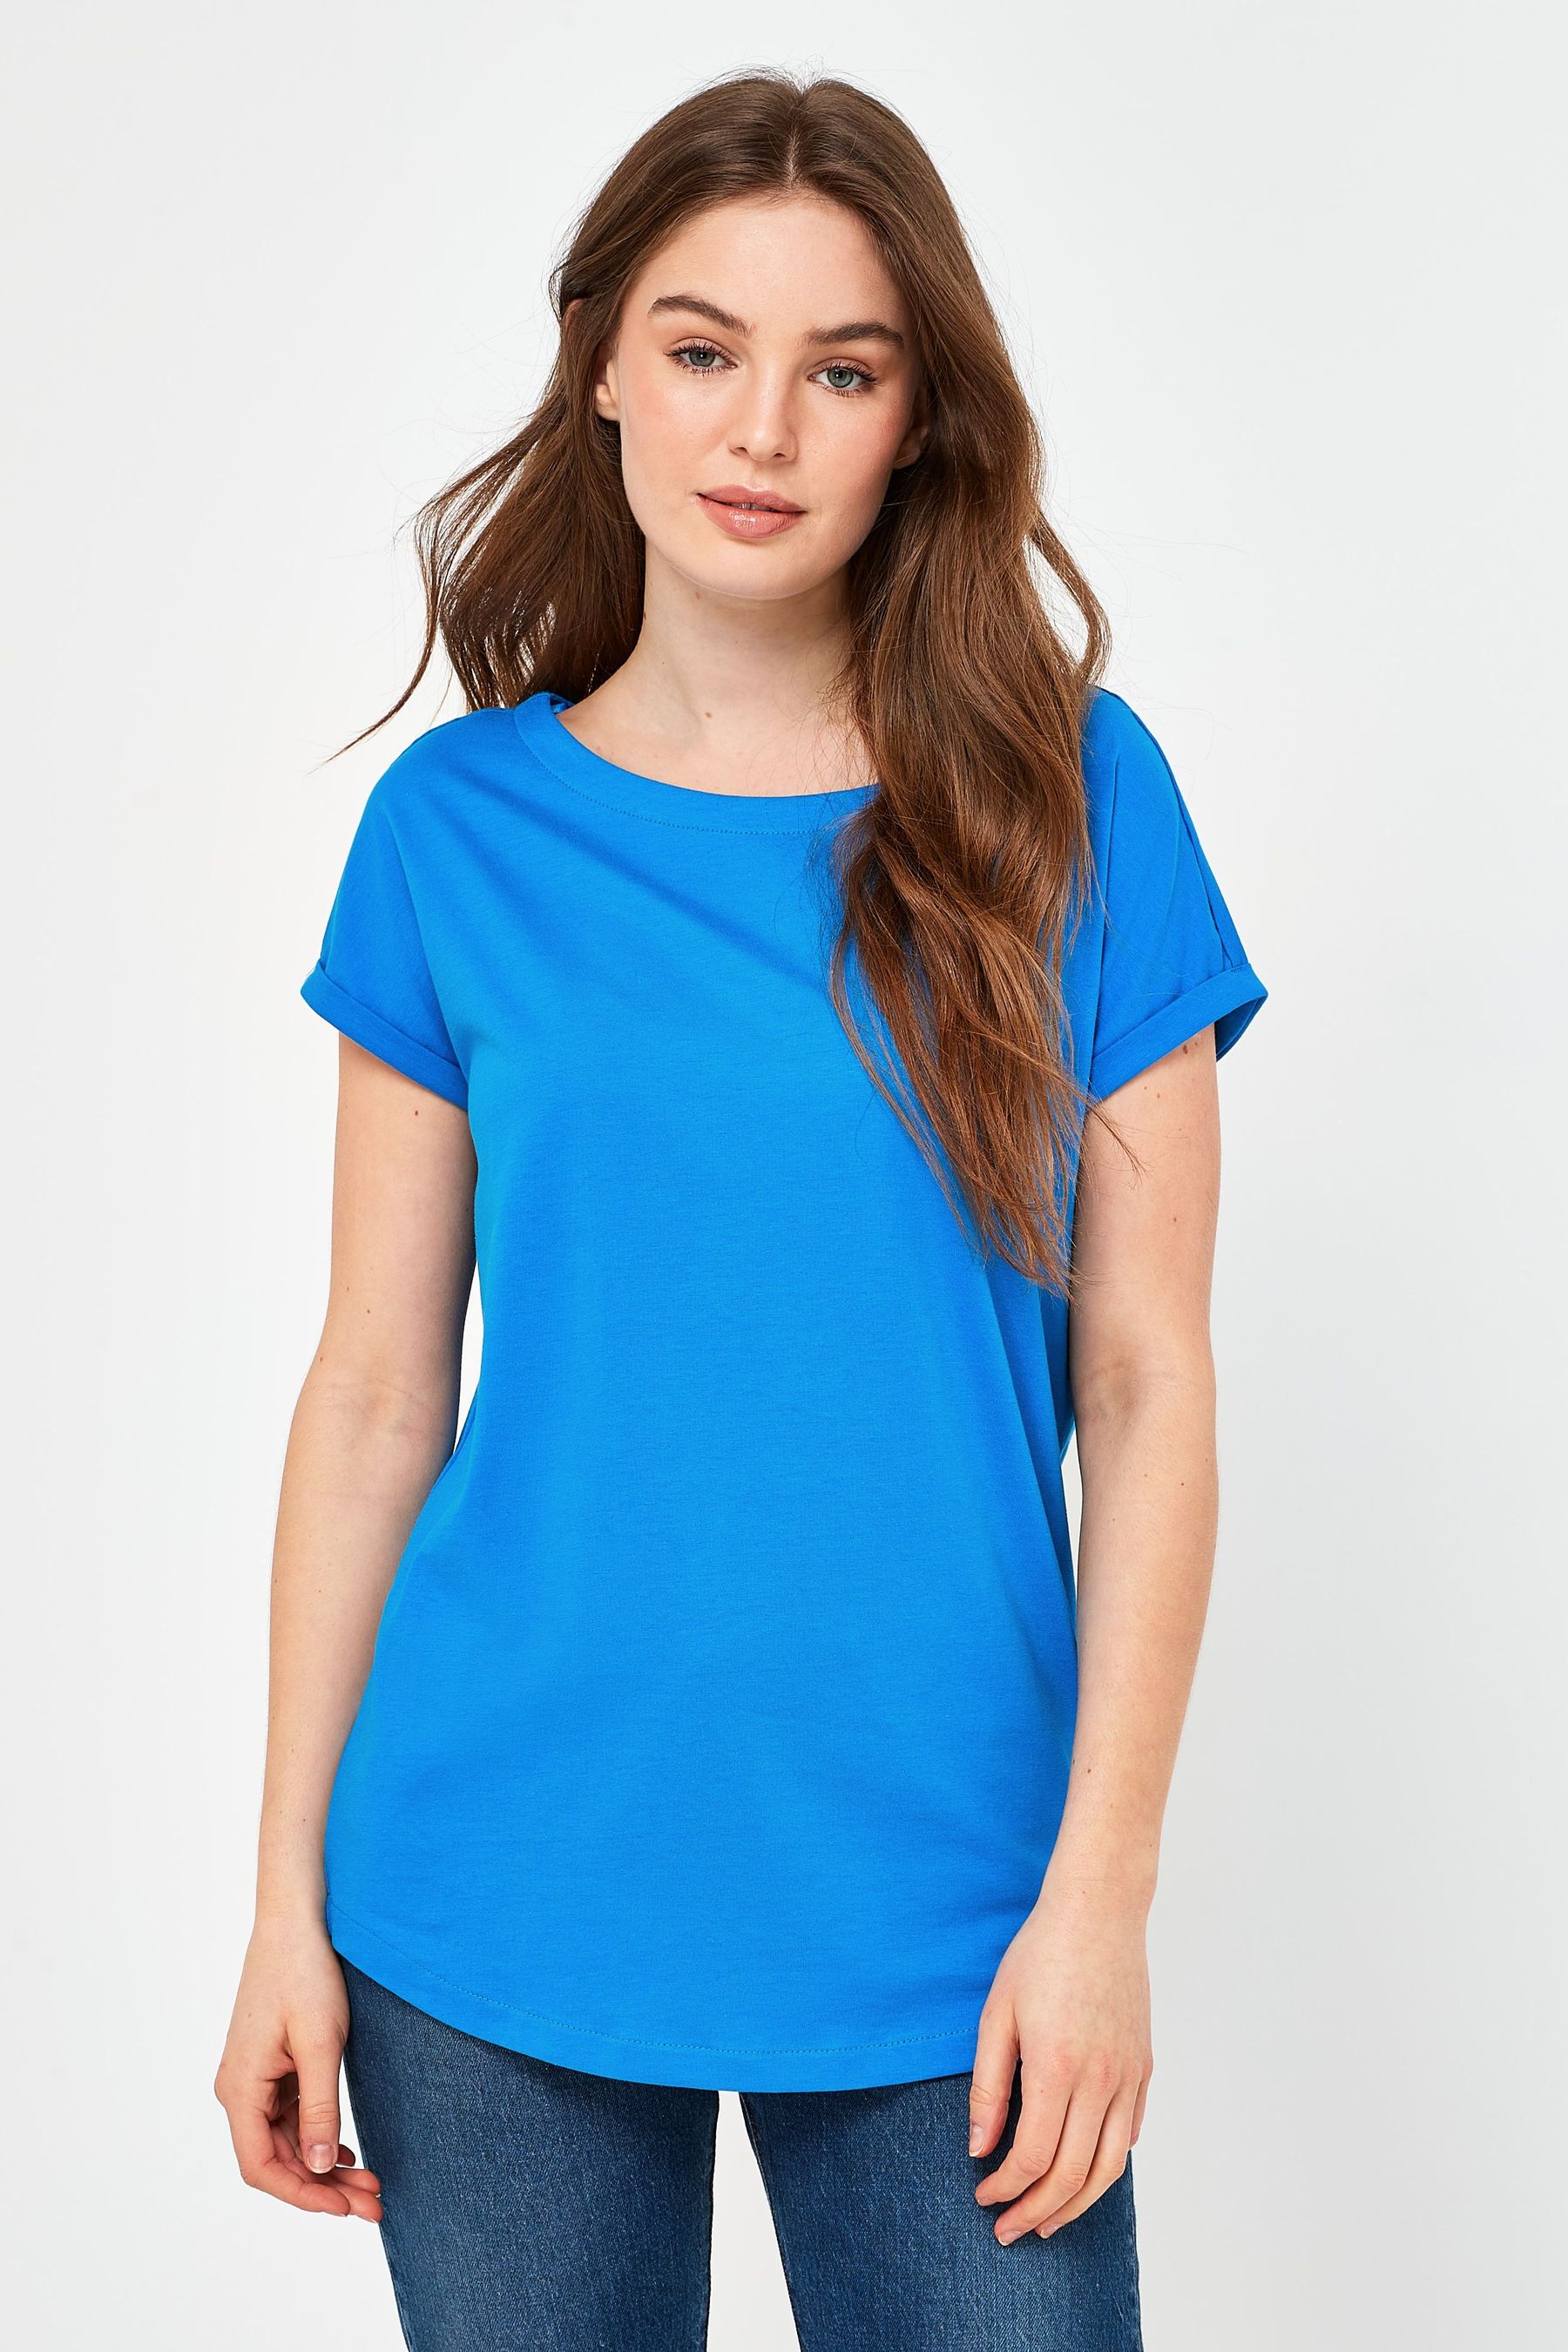 Buy Cobalt Blue Round Neck Cap Sleeve T-Shirt from the Next UK online shop